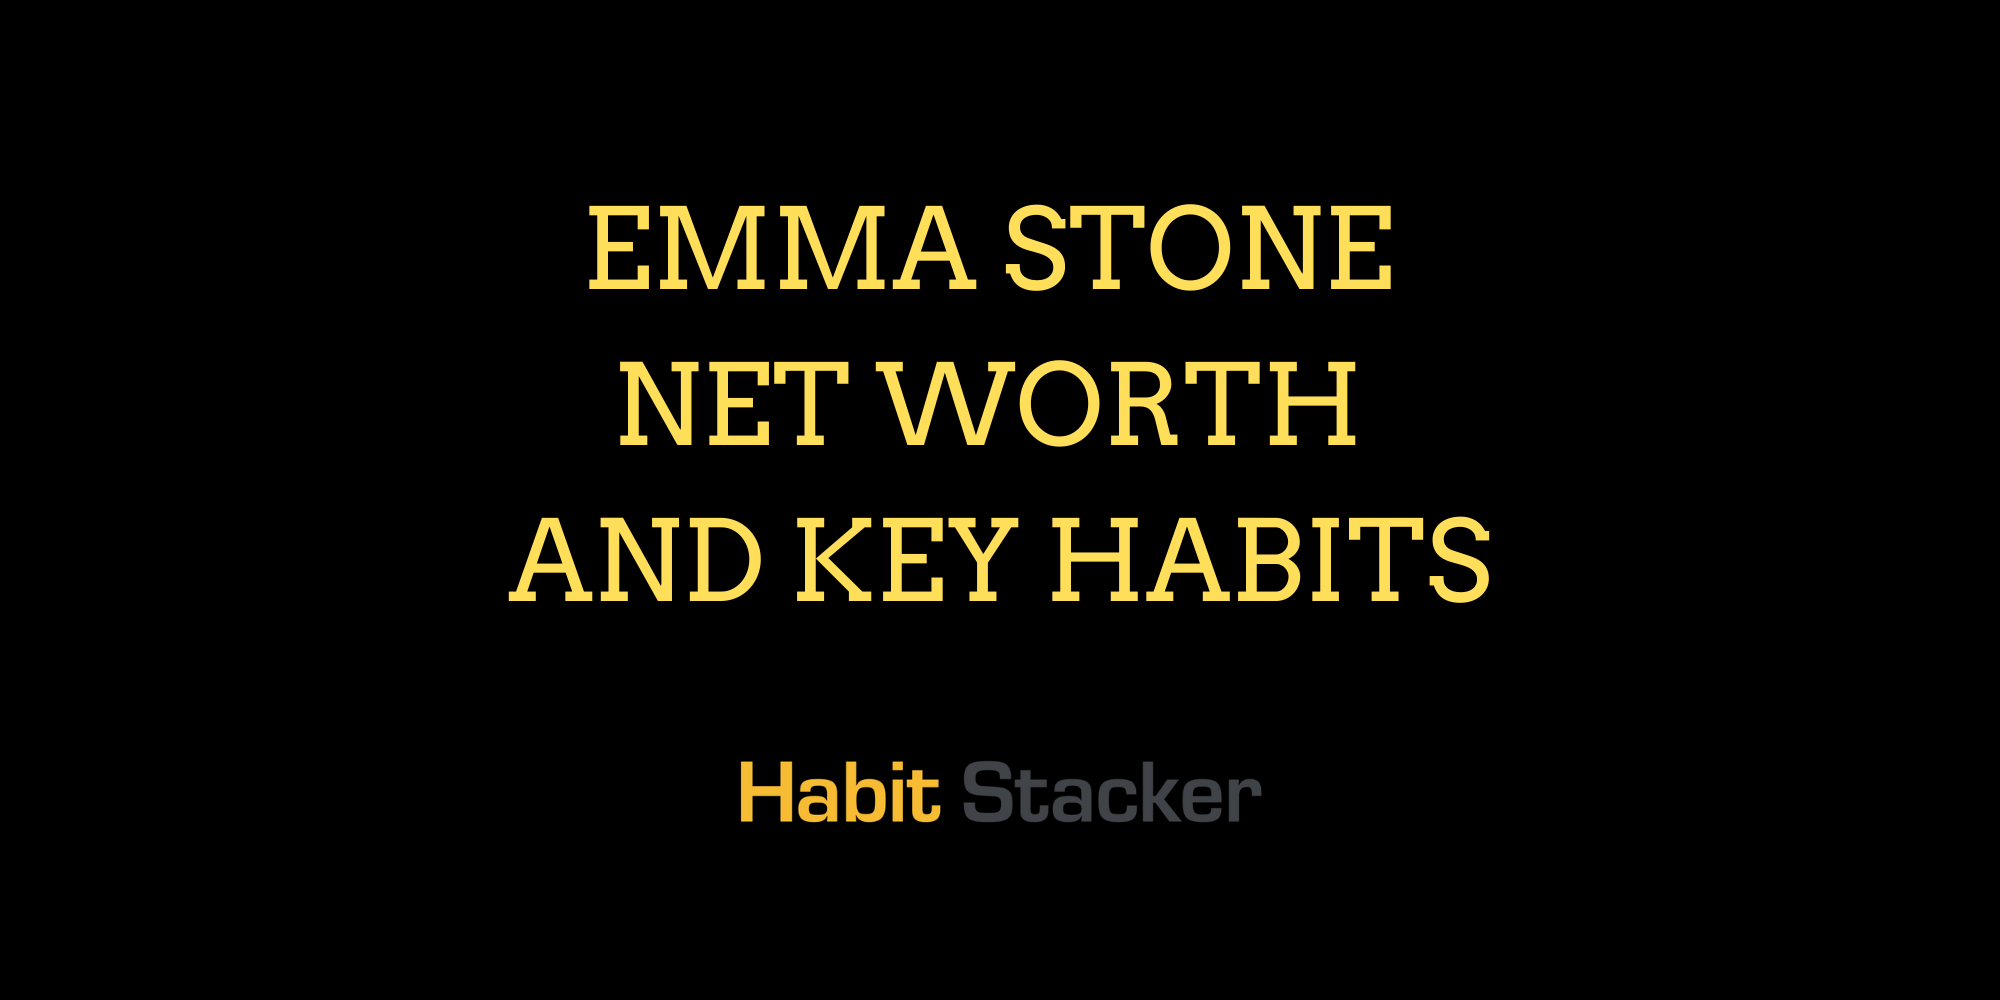 Emma Stone Net Worth and Key Habits